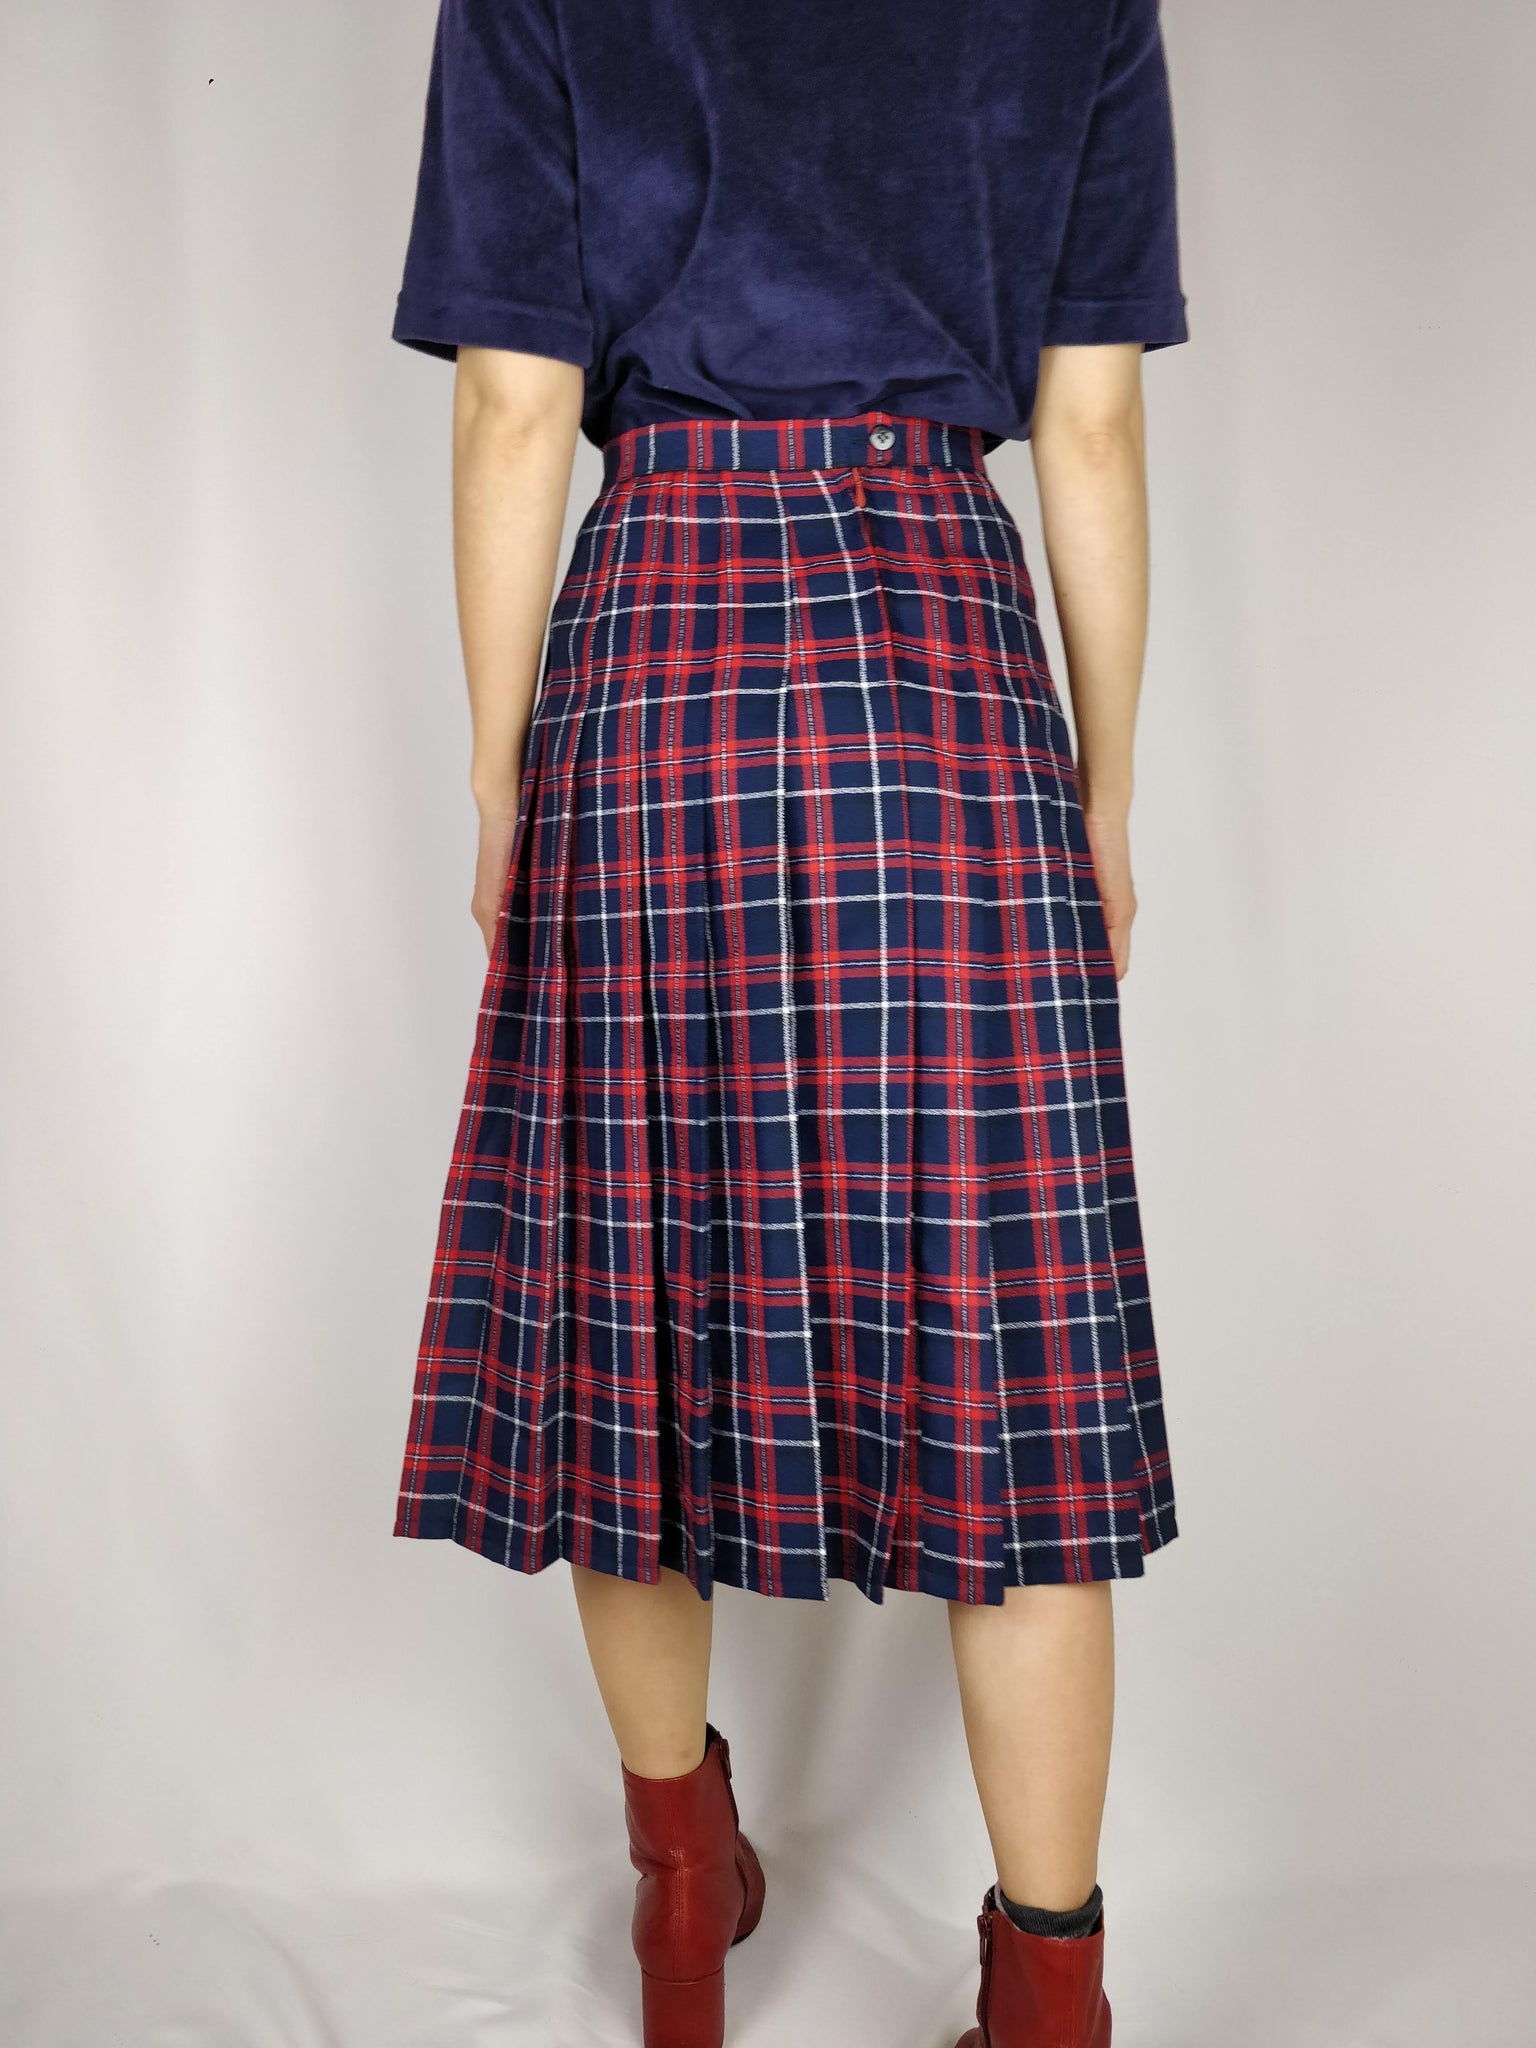 The Navy Red Tartan Skirt  Vintage checker plaid pleated kilt